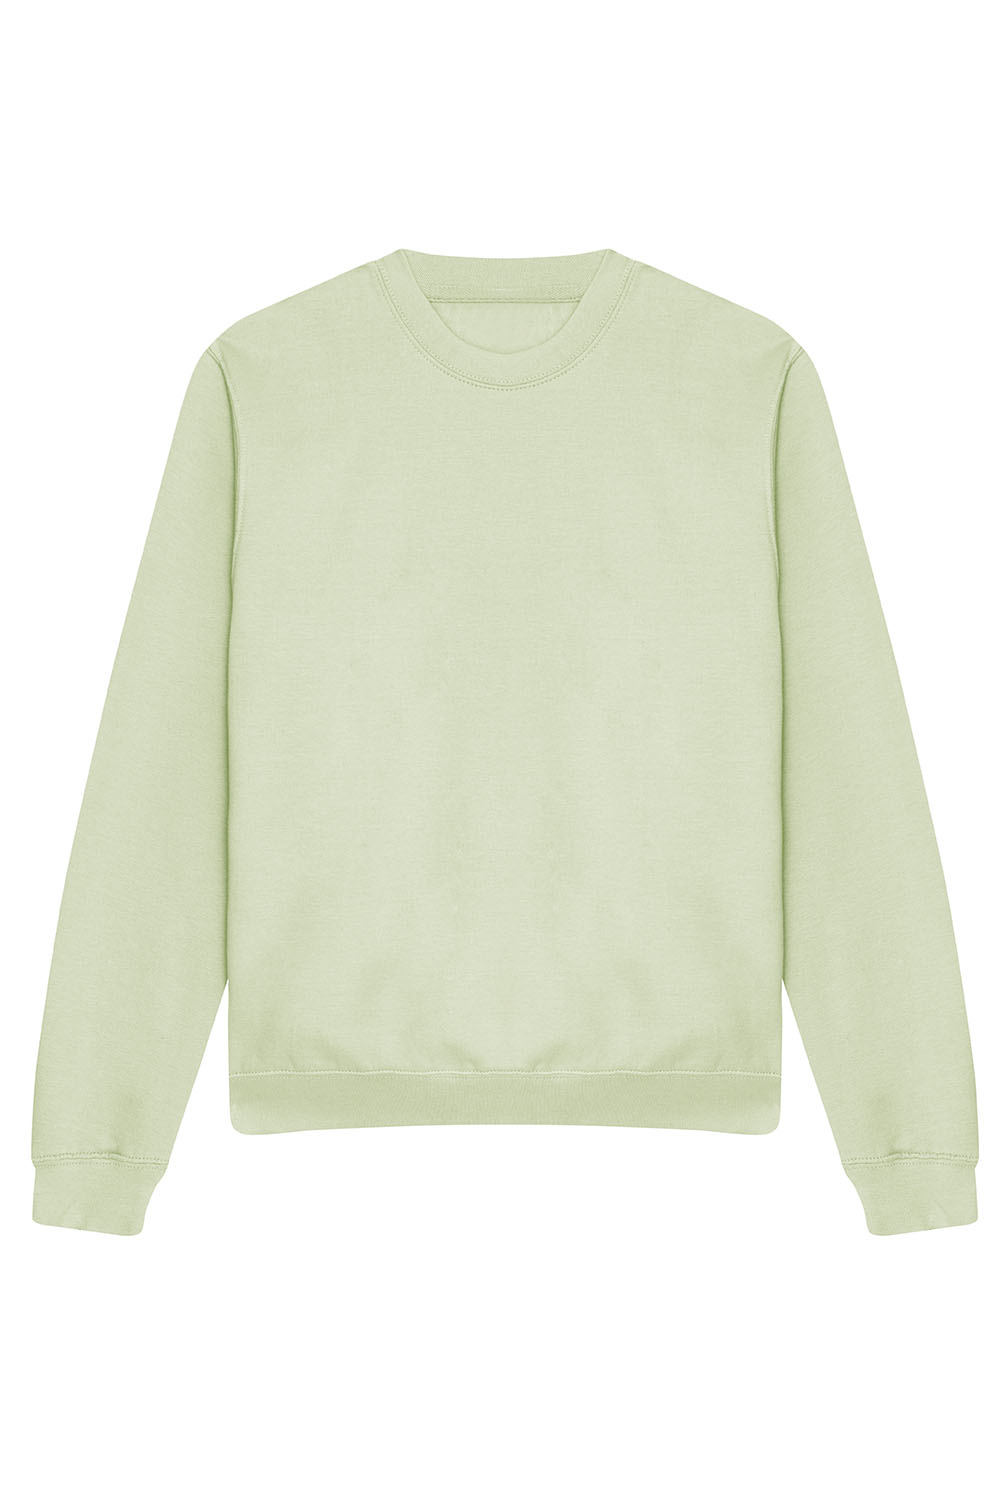 Plain Sweatshirt In Pistachio Green (Single).